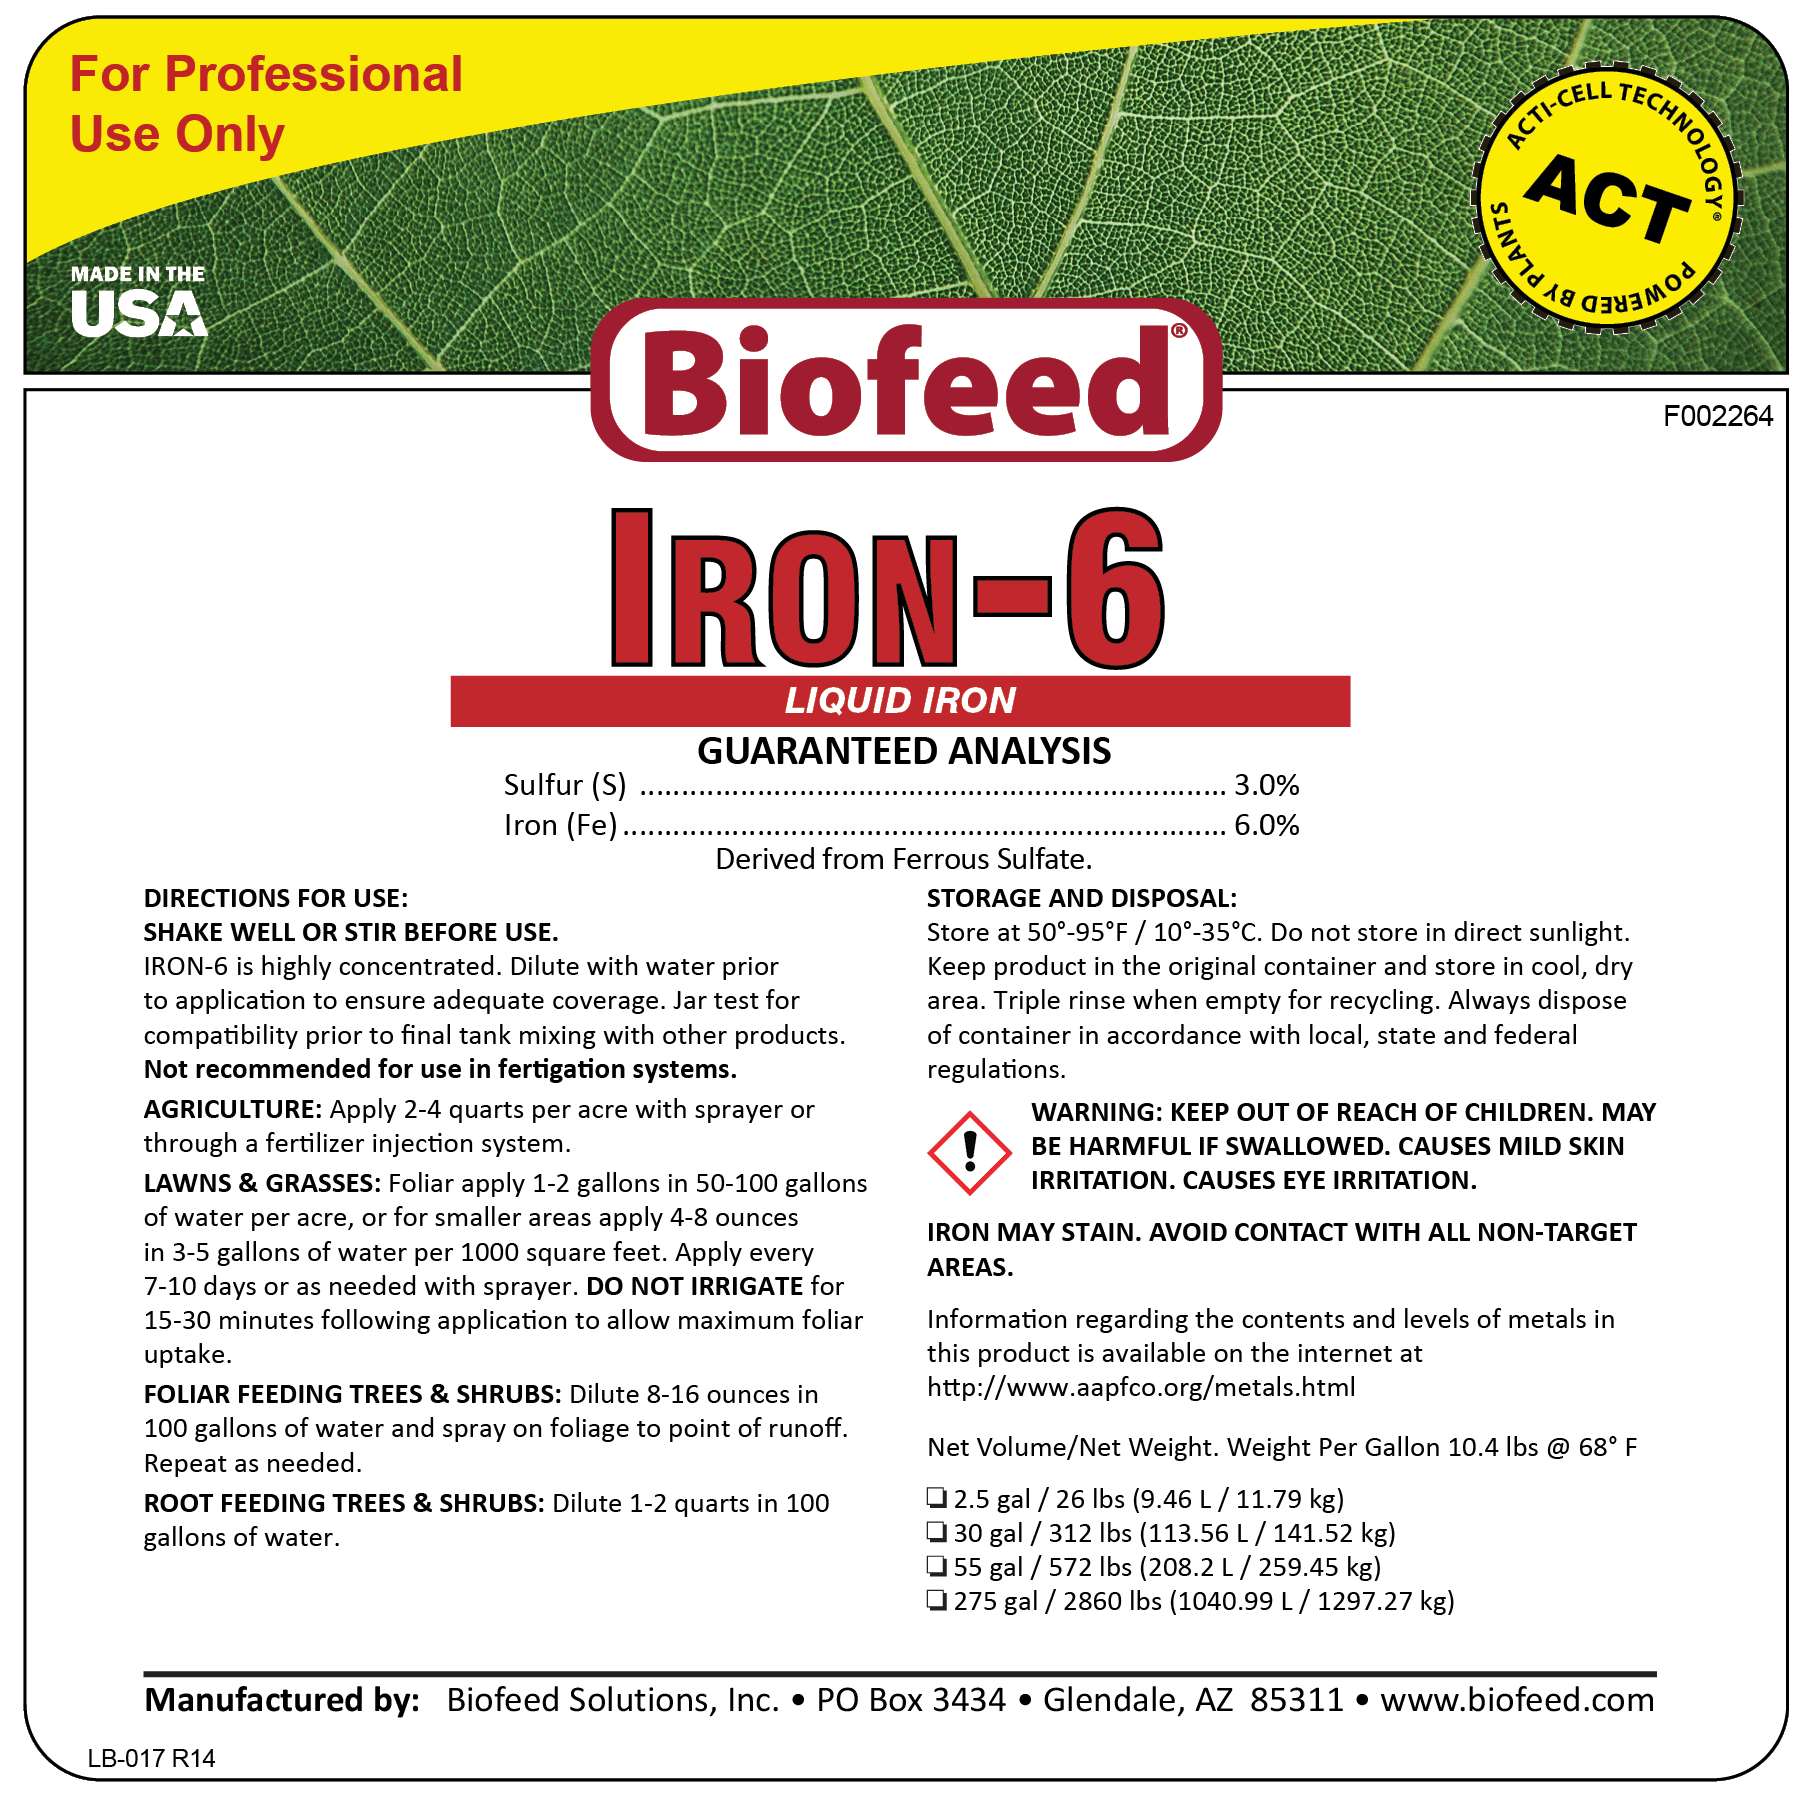 IRON-6 Liquid Iron